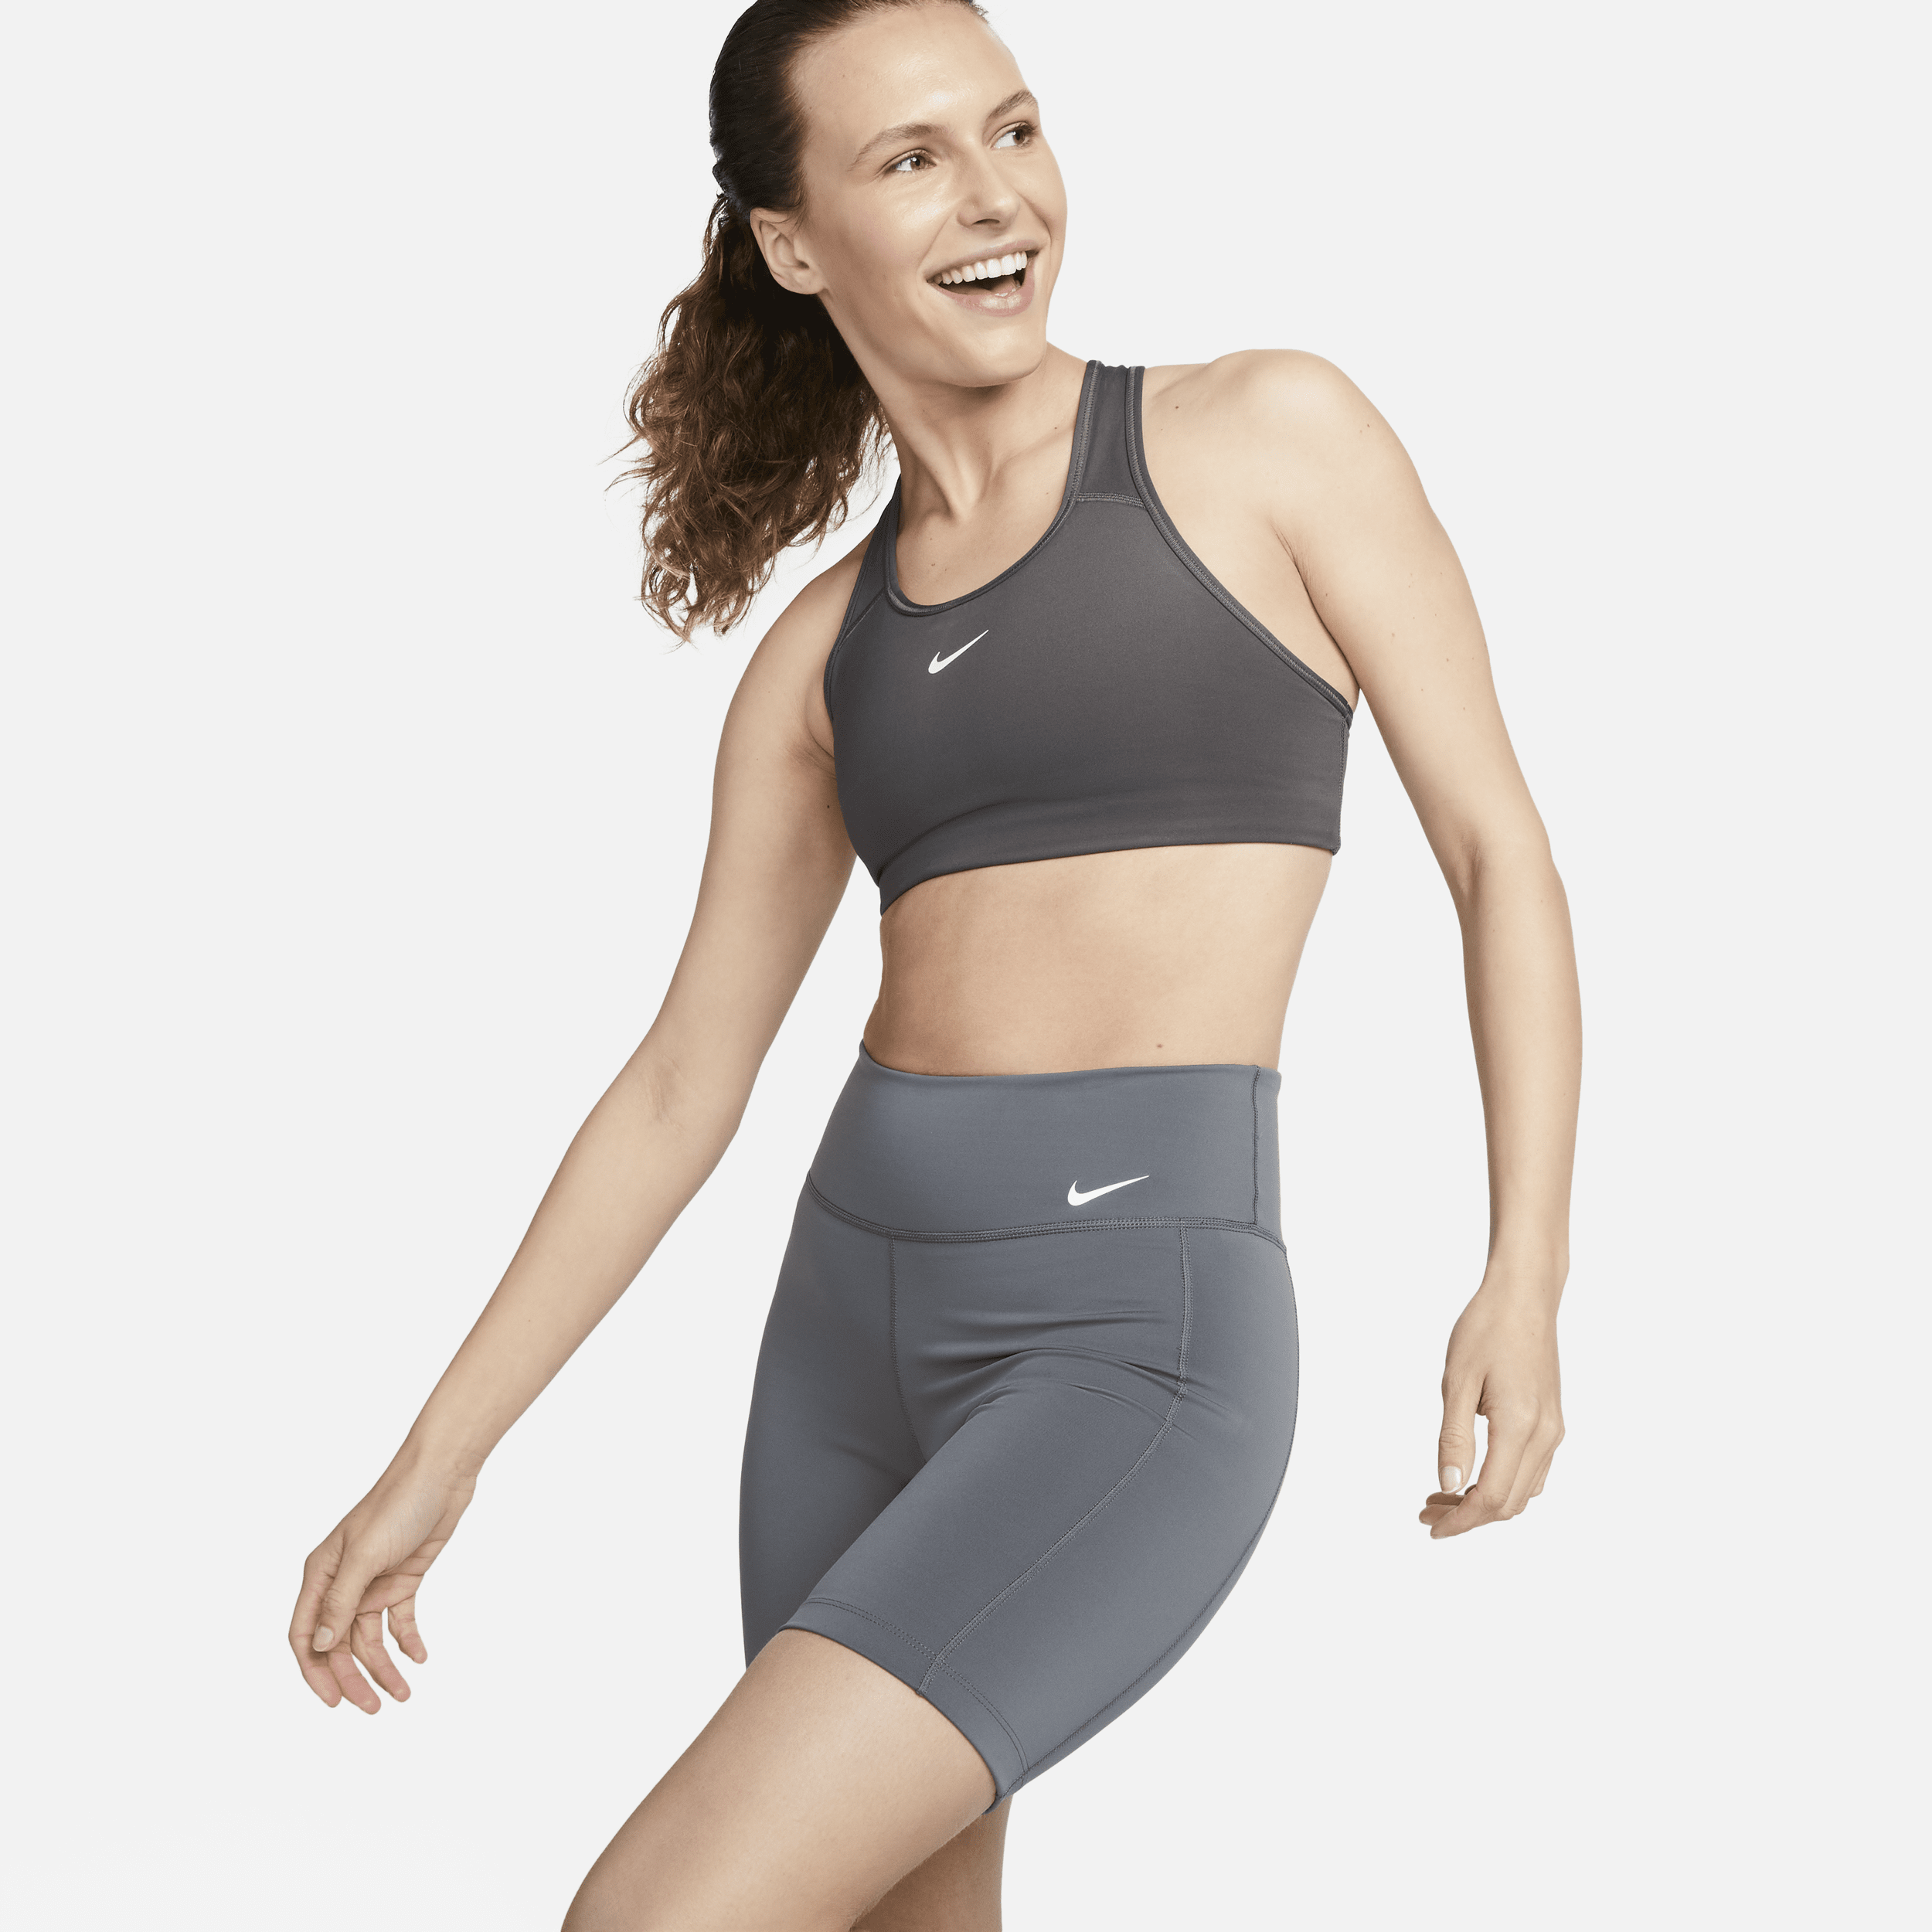 Nike One Leak Protection: Period Mallas cortas de talle medio de 18 cm - Mujer - Gris